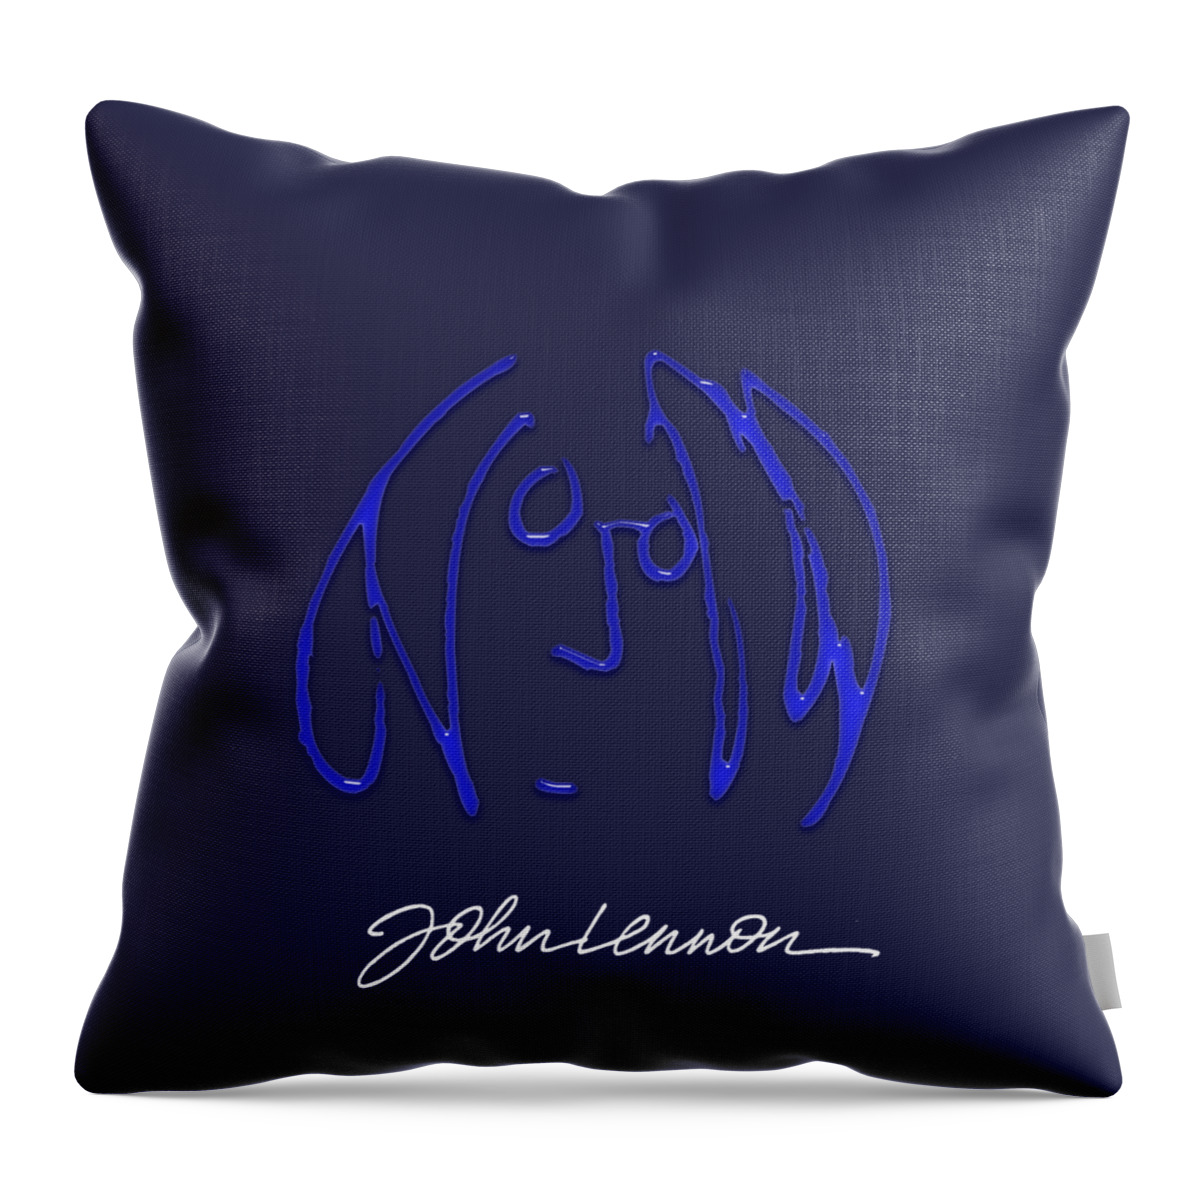 John Lennon Throw Pillow featuring the photograph John Lennon Give Peace A Chance by Marvin Blaine